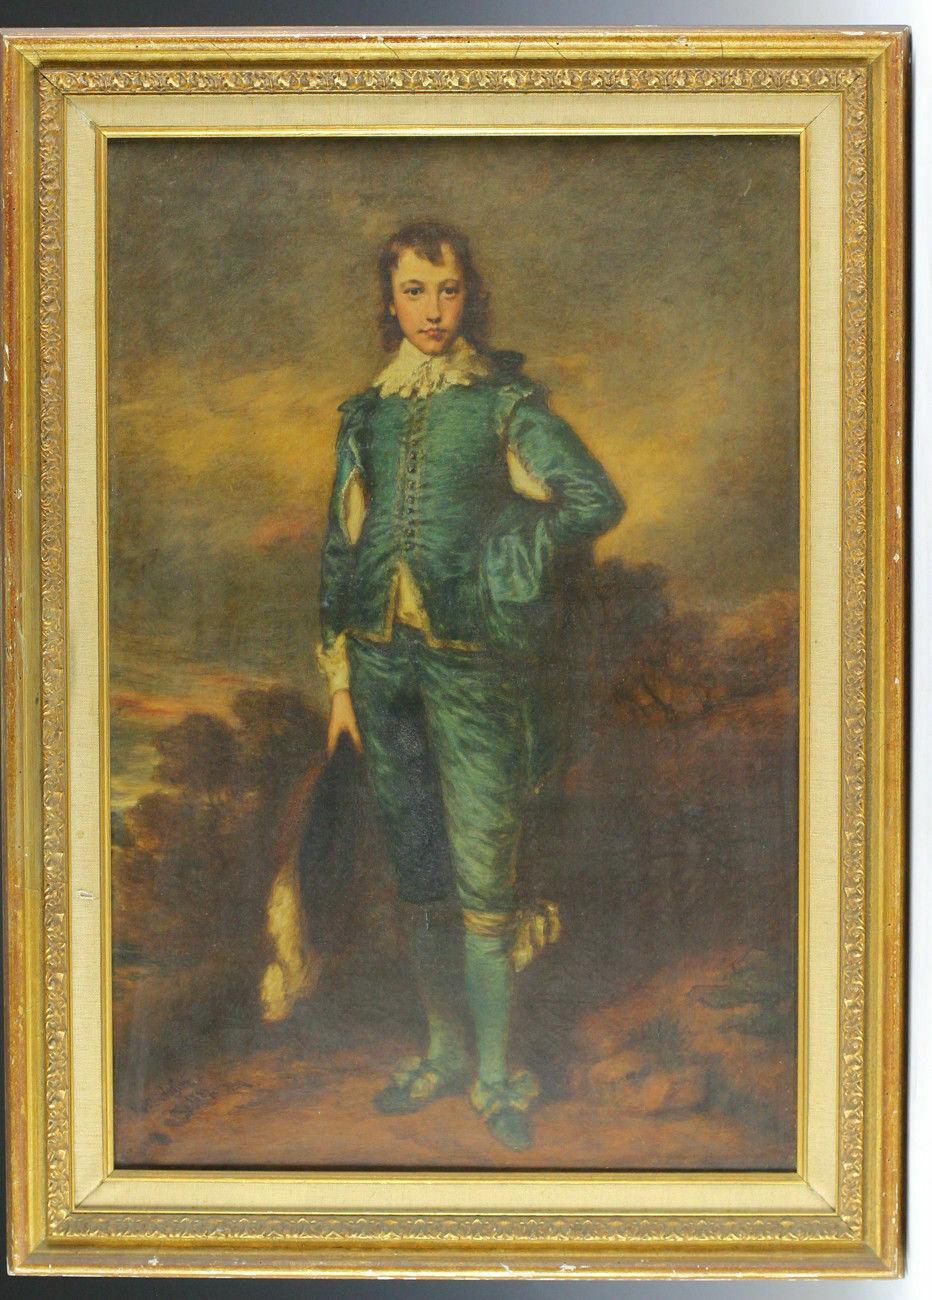 Crozier, Robert (British, 1815-1891) oil on canvas portrait after 